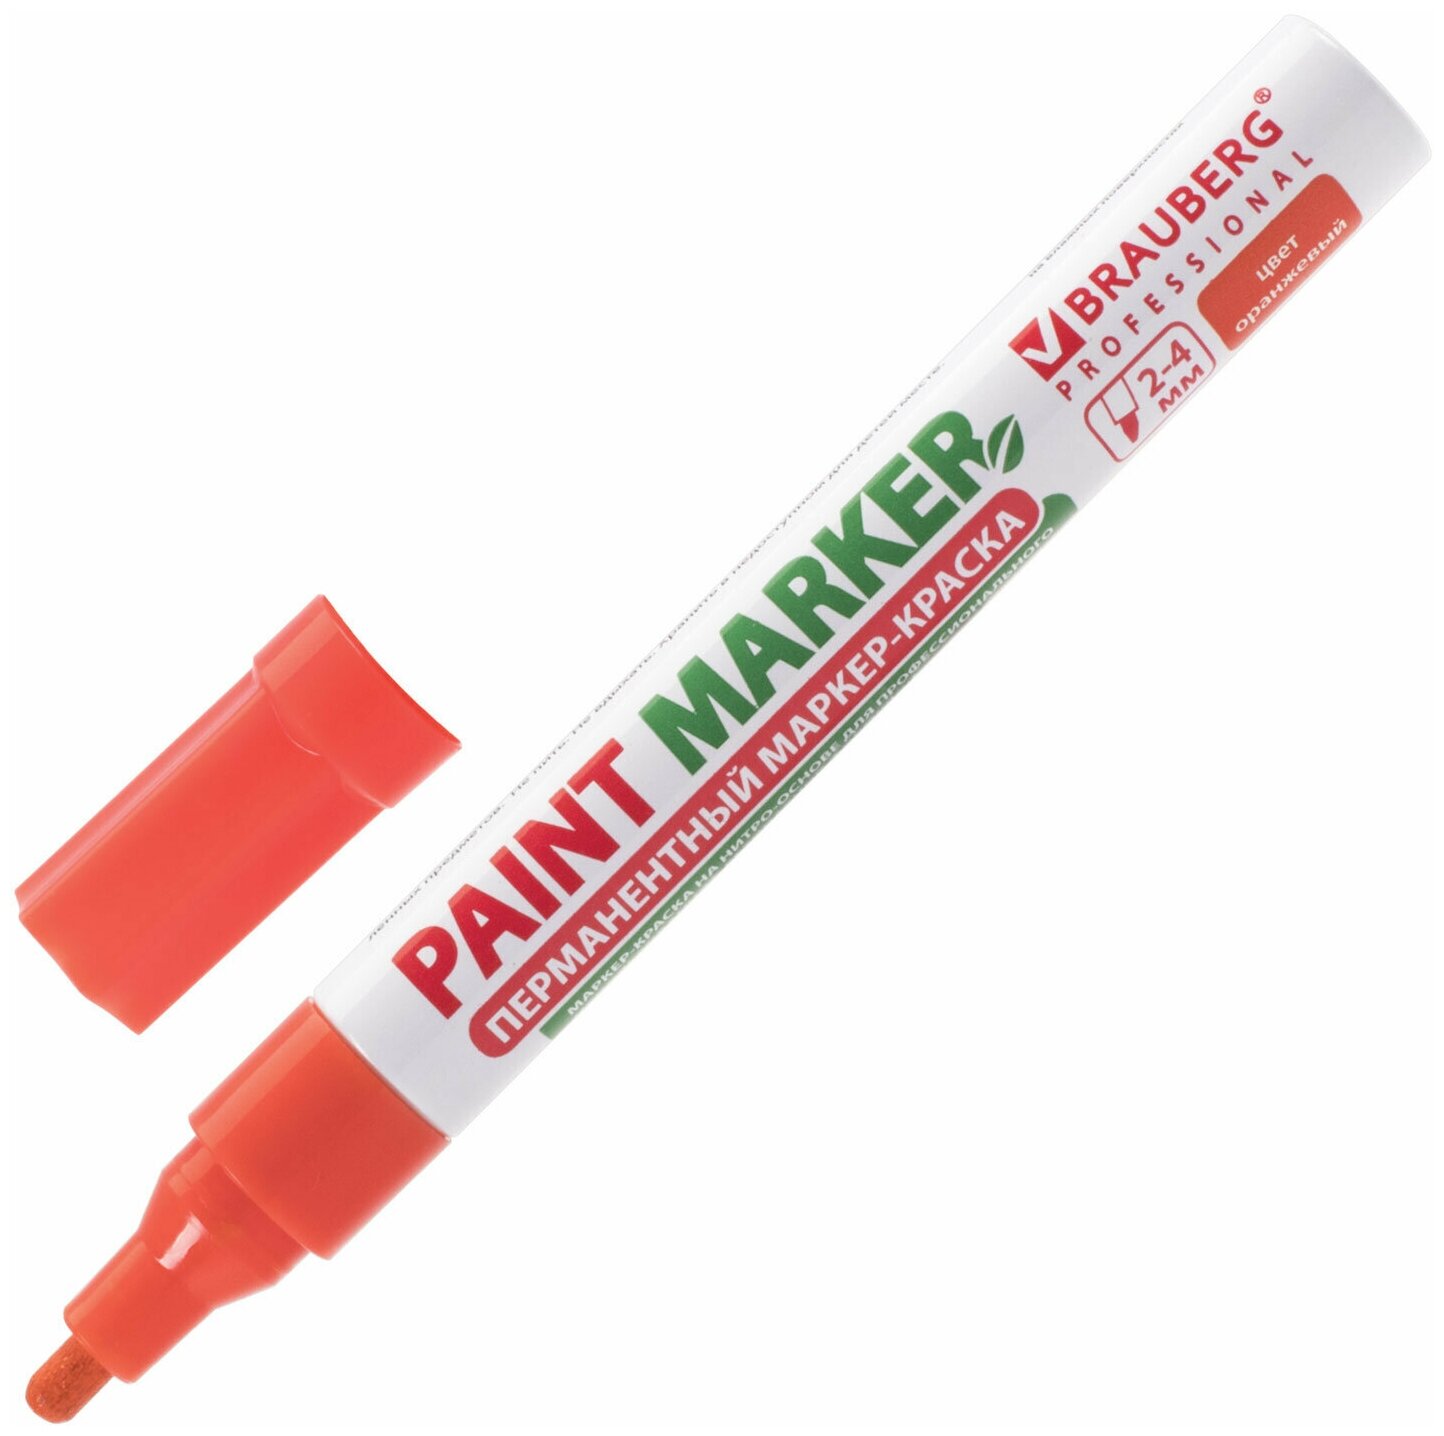 Маркер-краска лаковый paint marker по стеклу / бетону / авто 4 мм, Оранжевый, Без Ксилола (без запаха), алюминий, Brauberg Professional, 151437